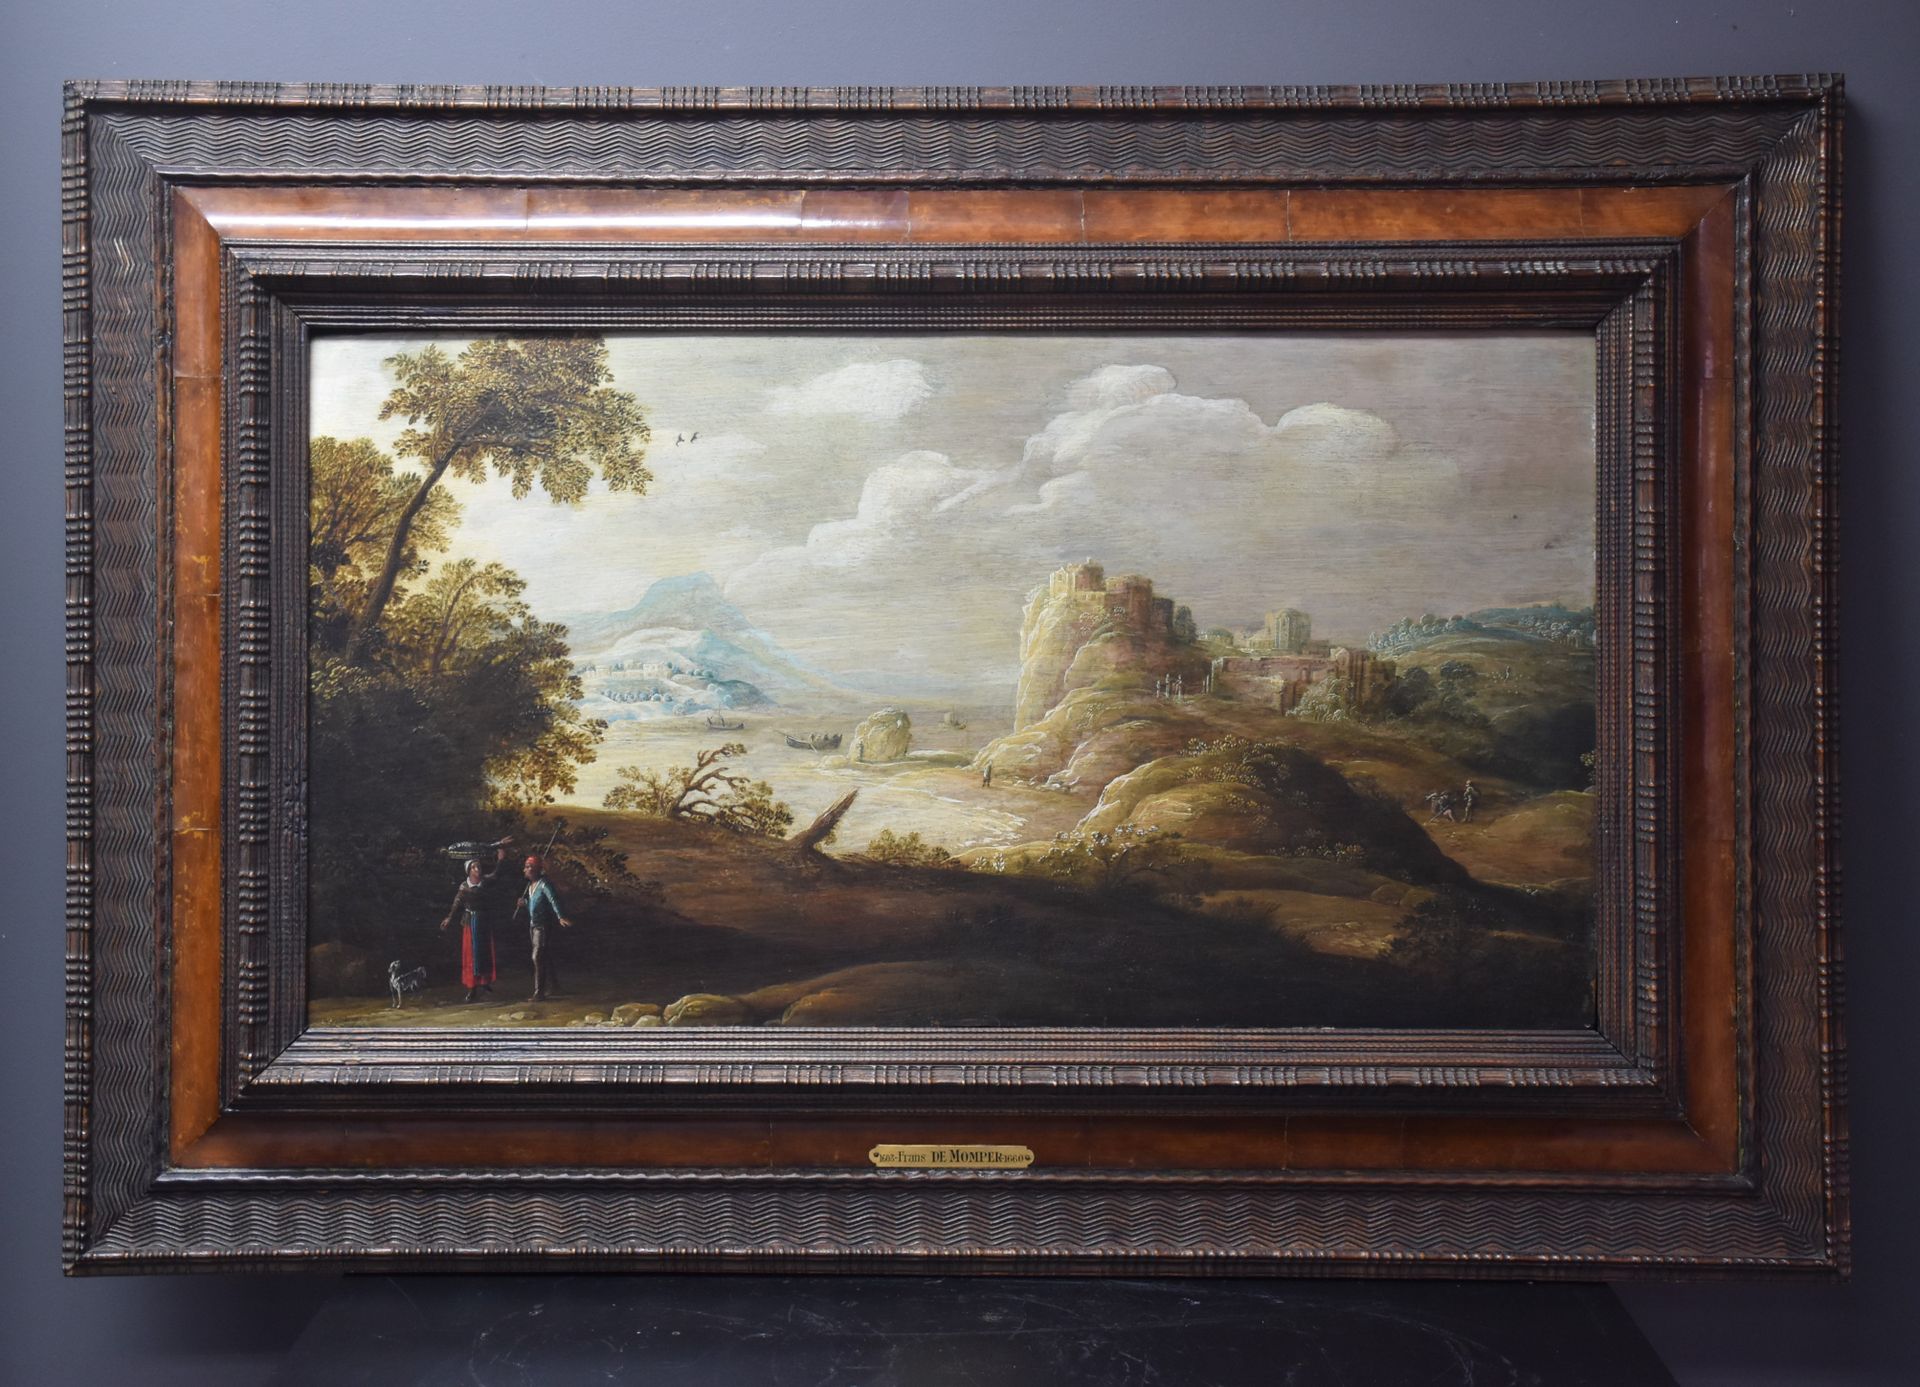 Null 一对夫妇在一个想象中的海湾边钓鱼回来，船上有船，人和一个城堡。橡木板上的油画。佛兰德学校17世纪。印有 "Frans de Momper "的牌子。尺&hellip;